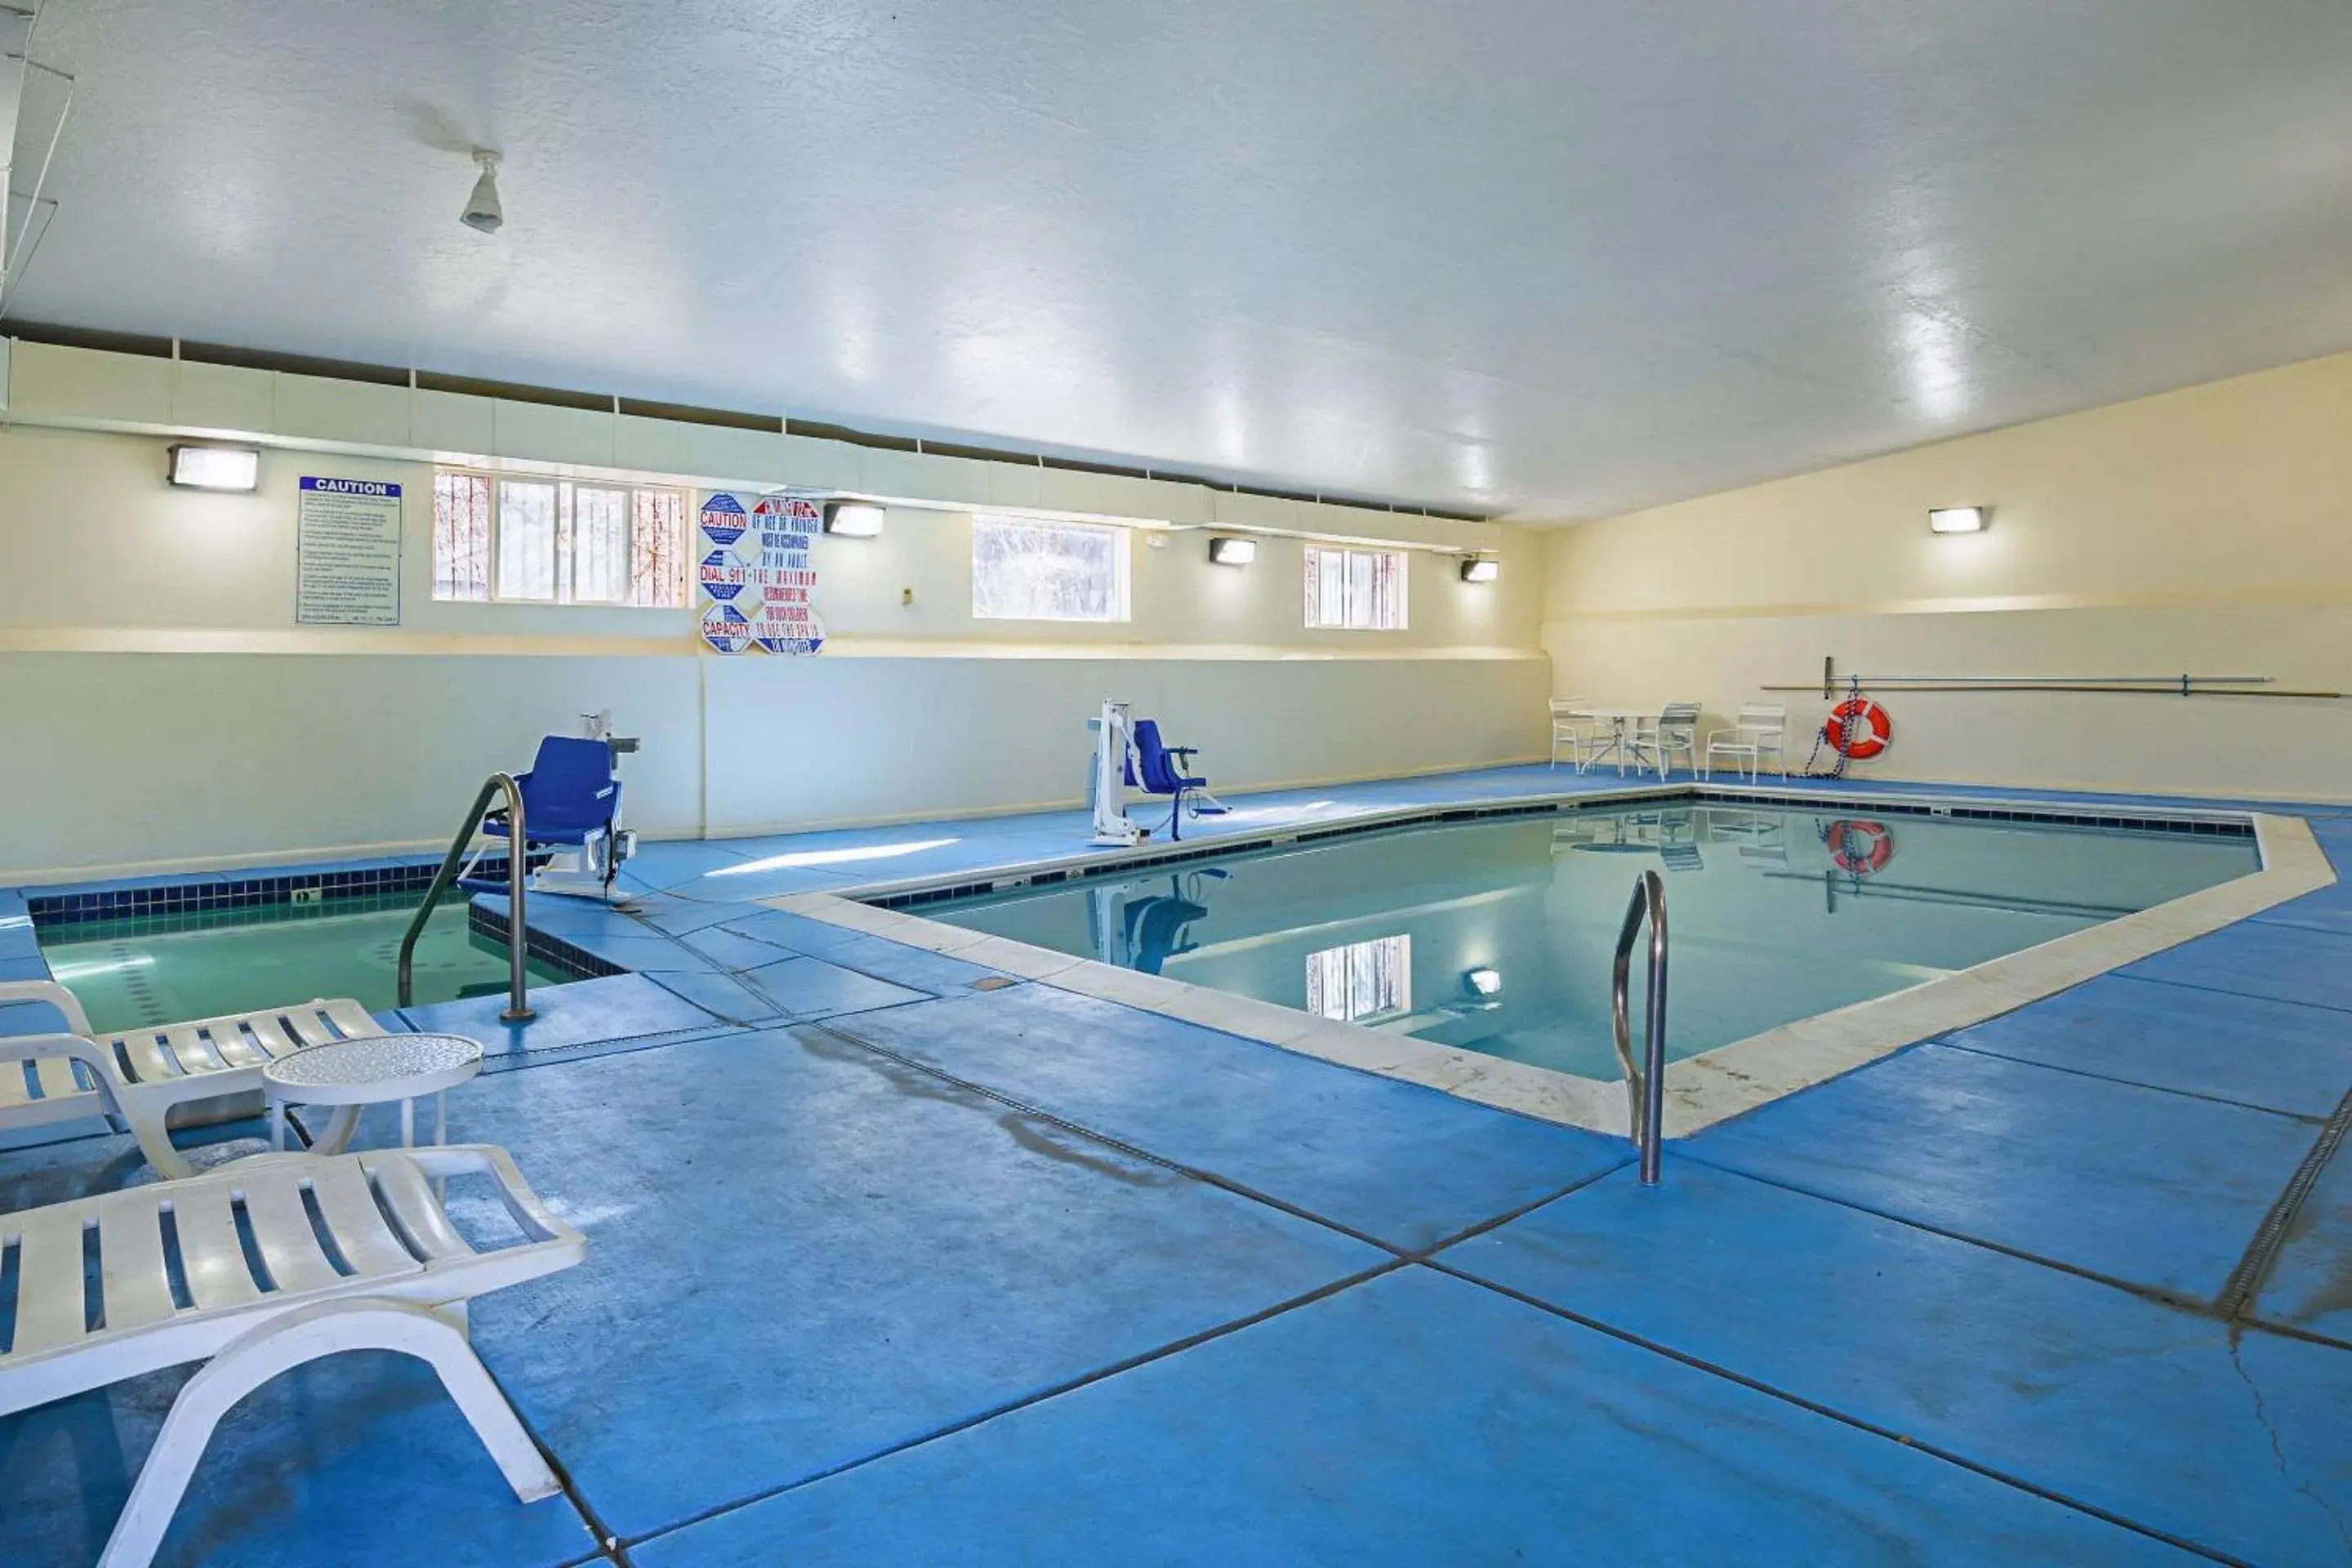 On site, Swimming Pool in Rodeway Inn Cedar City